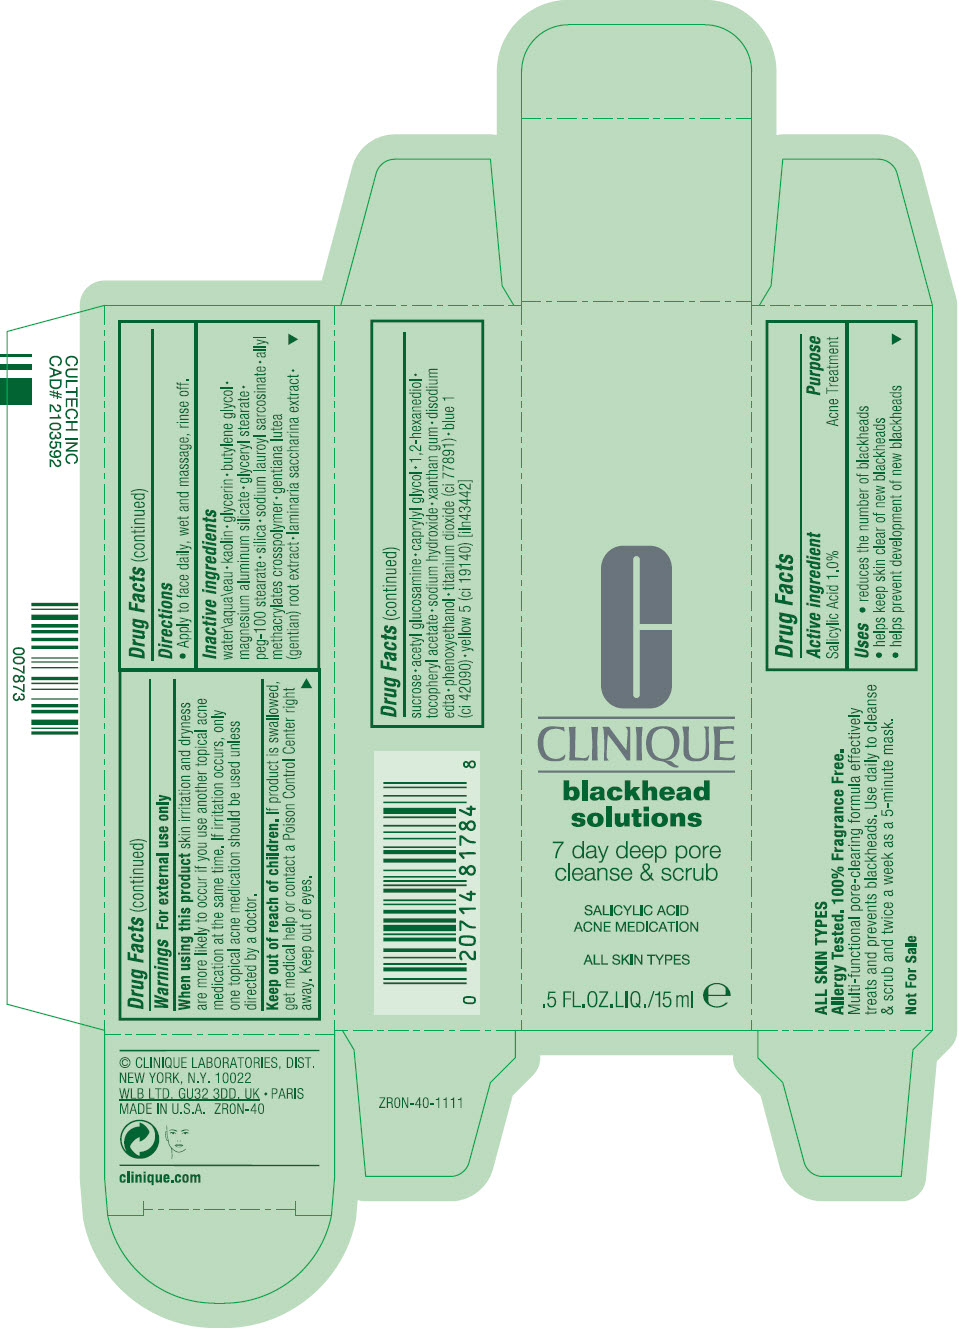 PRINCIPAL DISPLAY PANEL - 15 ml Bottle Carton